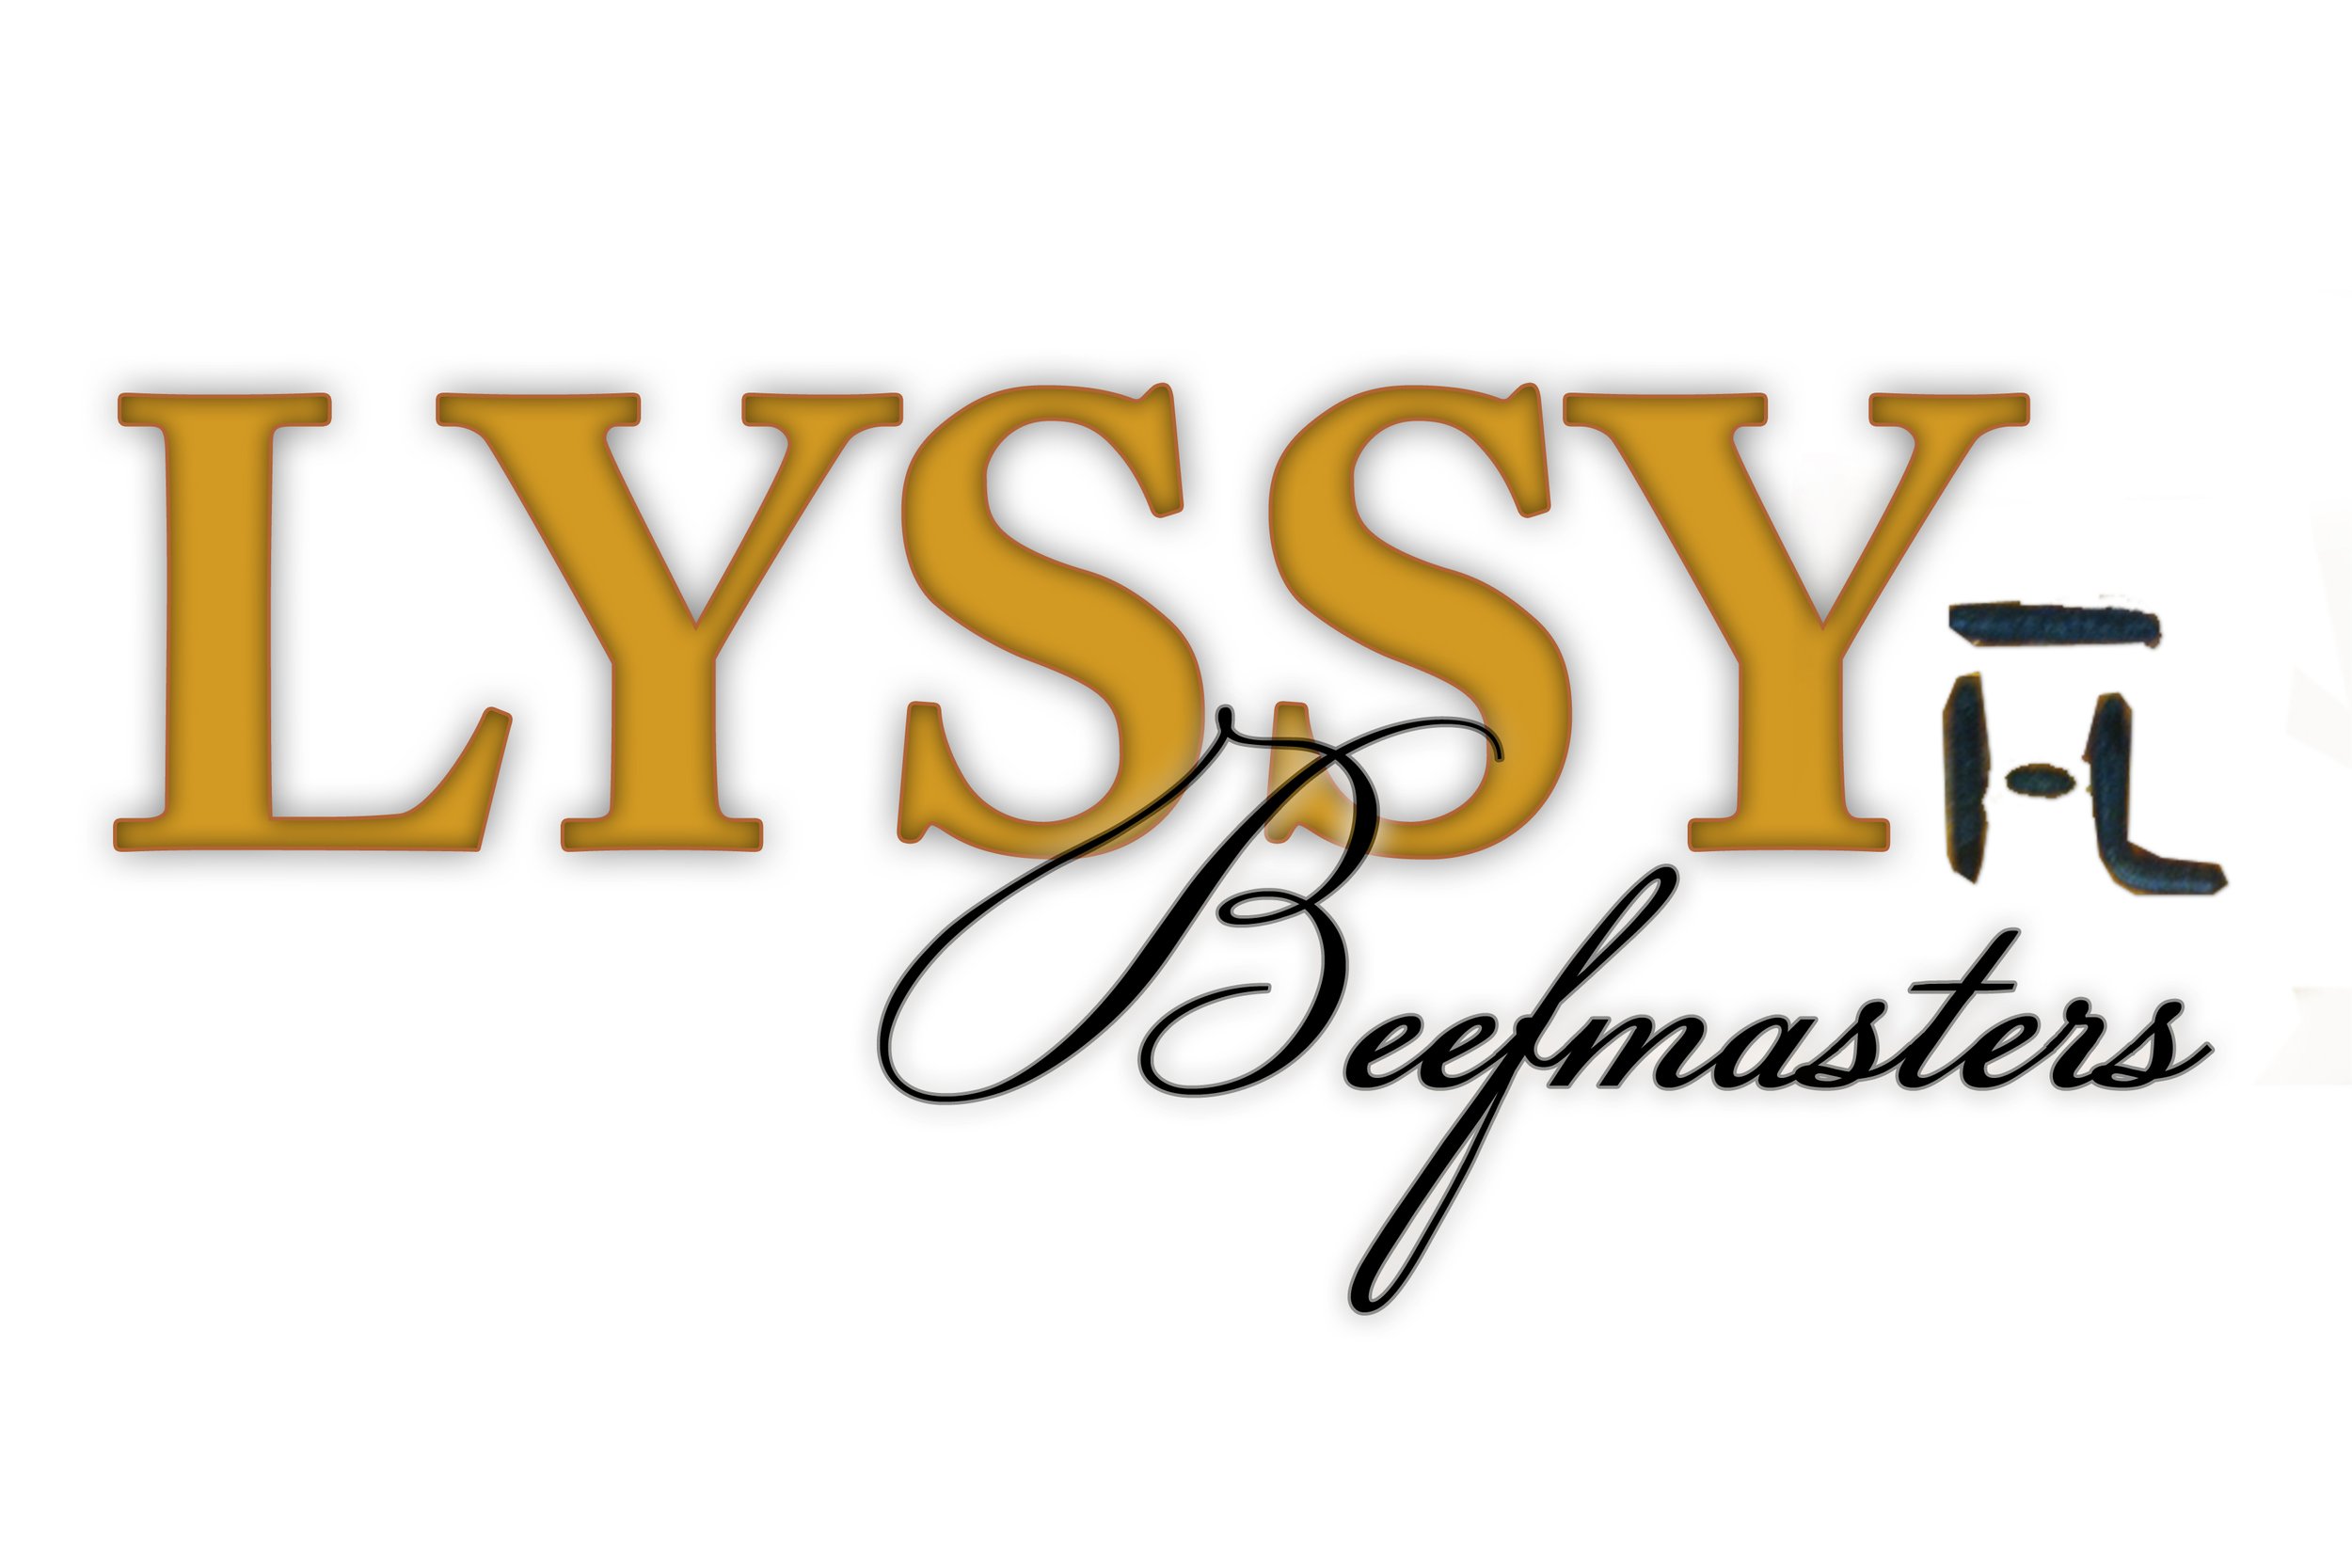 LyssyBeefmaster_logo.jpg